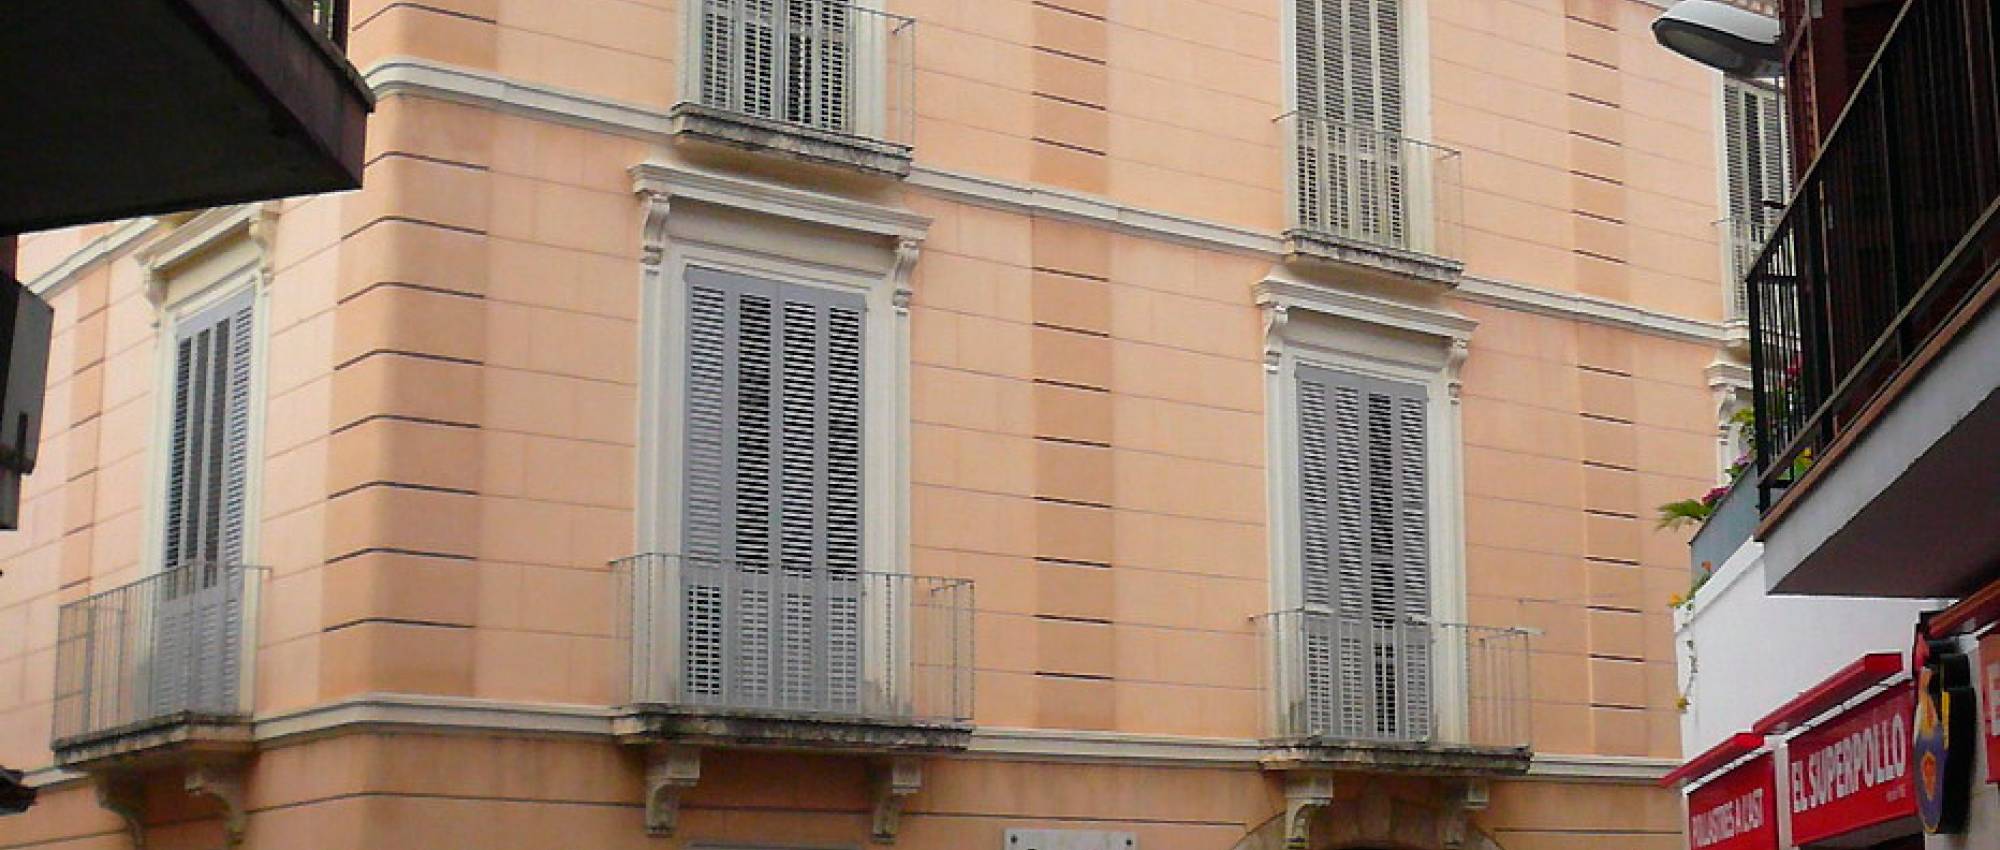 Detalle de la fachada de Can Llopis. CC BY-SA 3.0 - Pere López / Wikimedia Commons